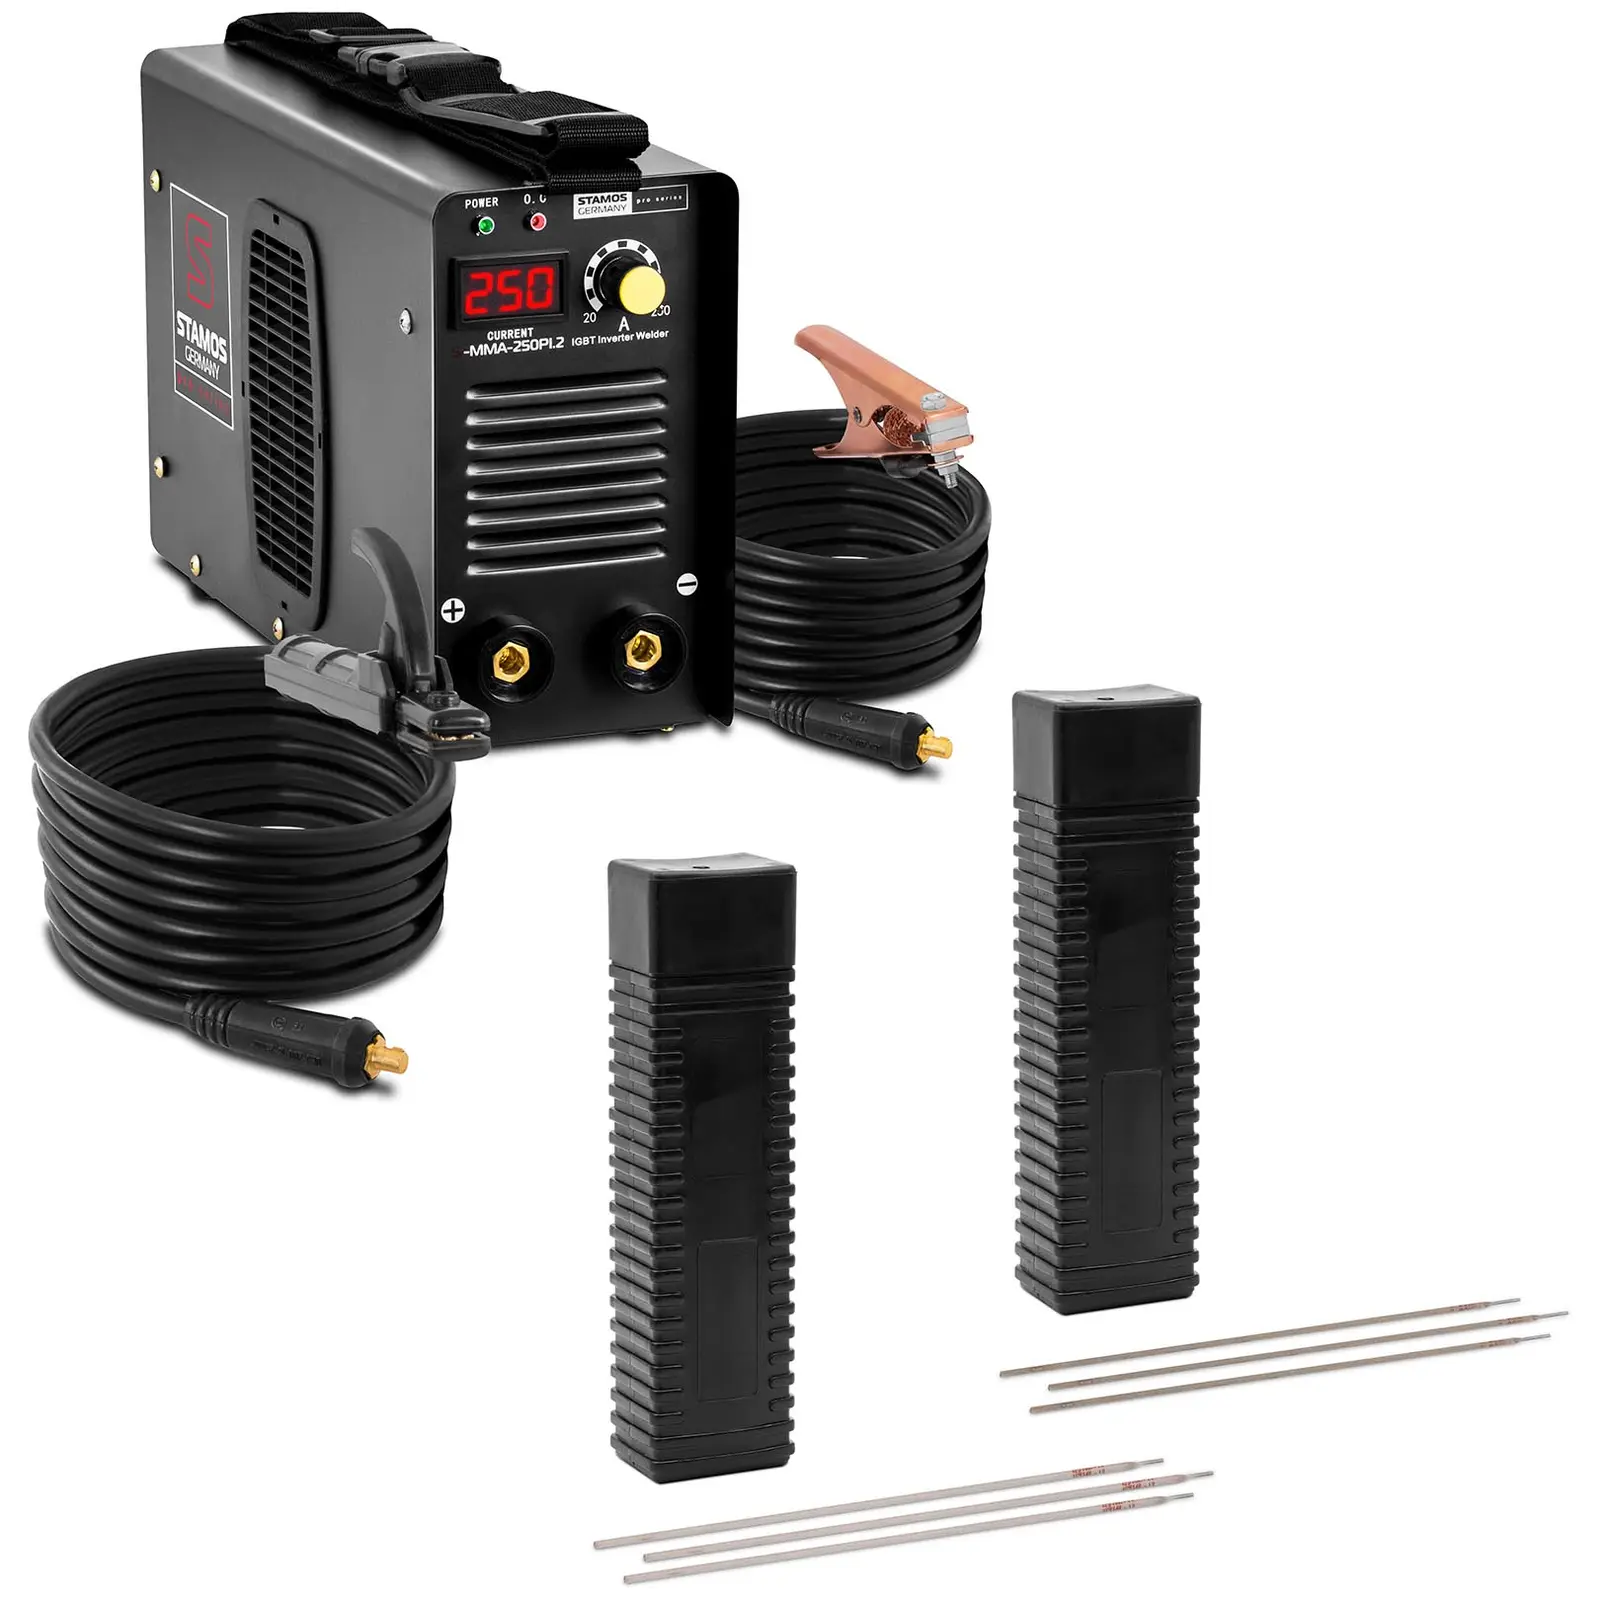 Svetsset elektroder svetsmaskin - 250 A - 8 m kabel - 60% arbetscykel - elektroder - E6013 - Ø 2 x 300 mm - 5 kg & E316L-17 - 2,5 x 350 mm - 5 kg